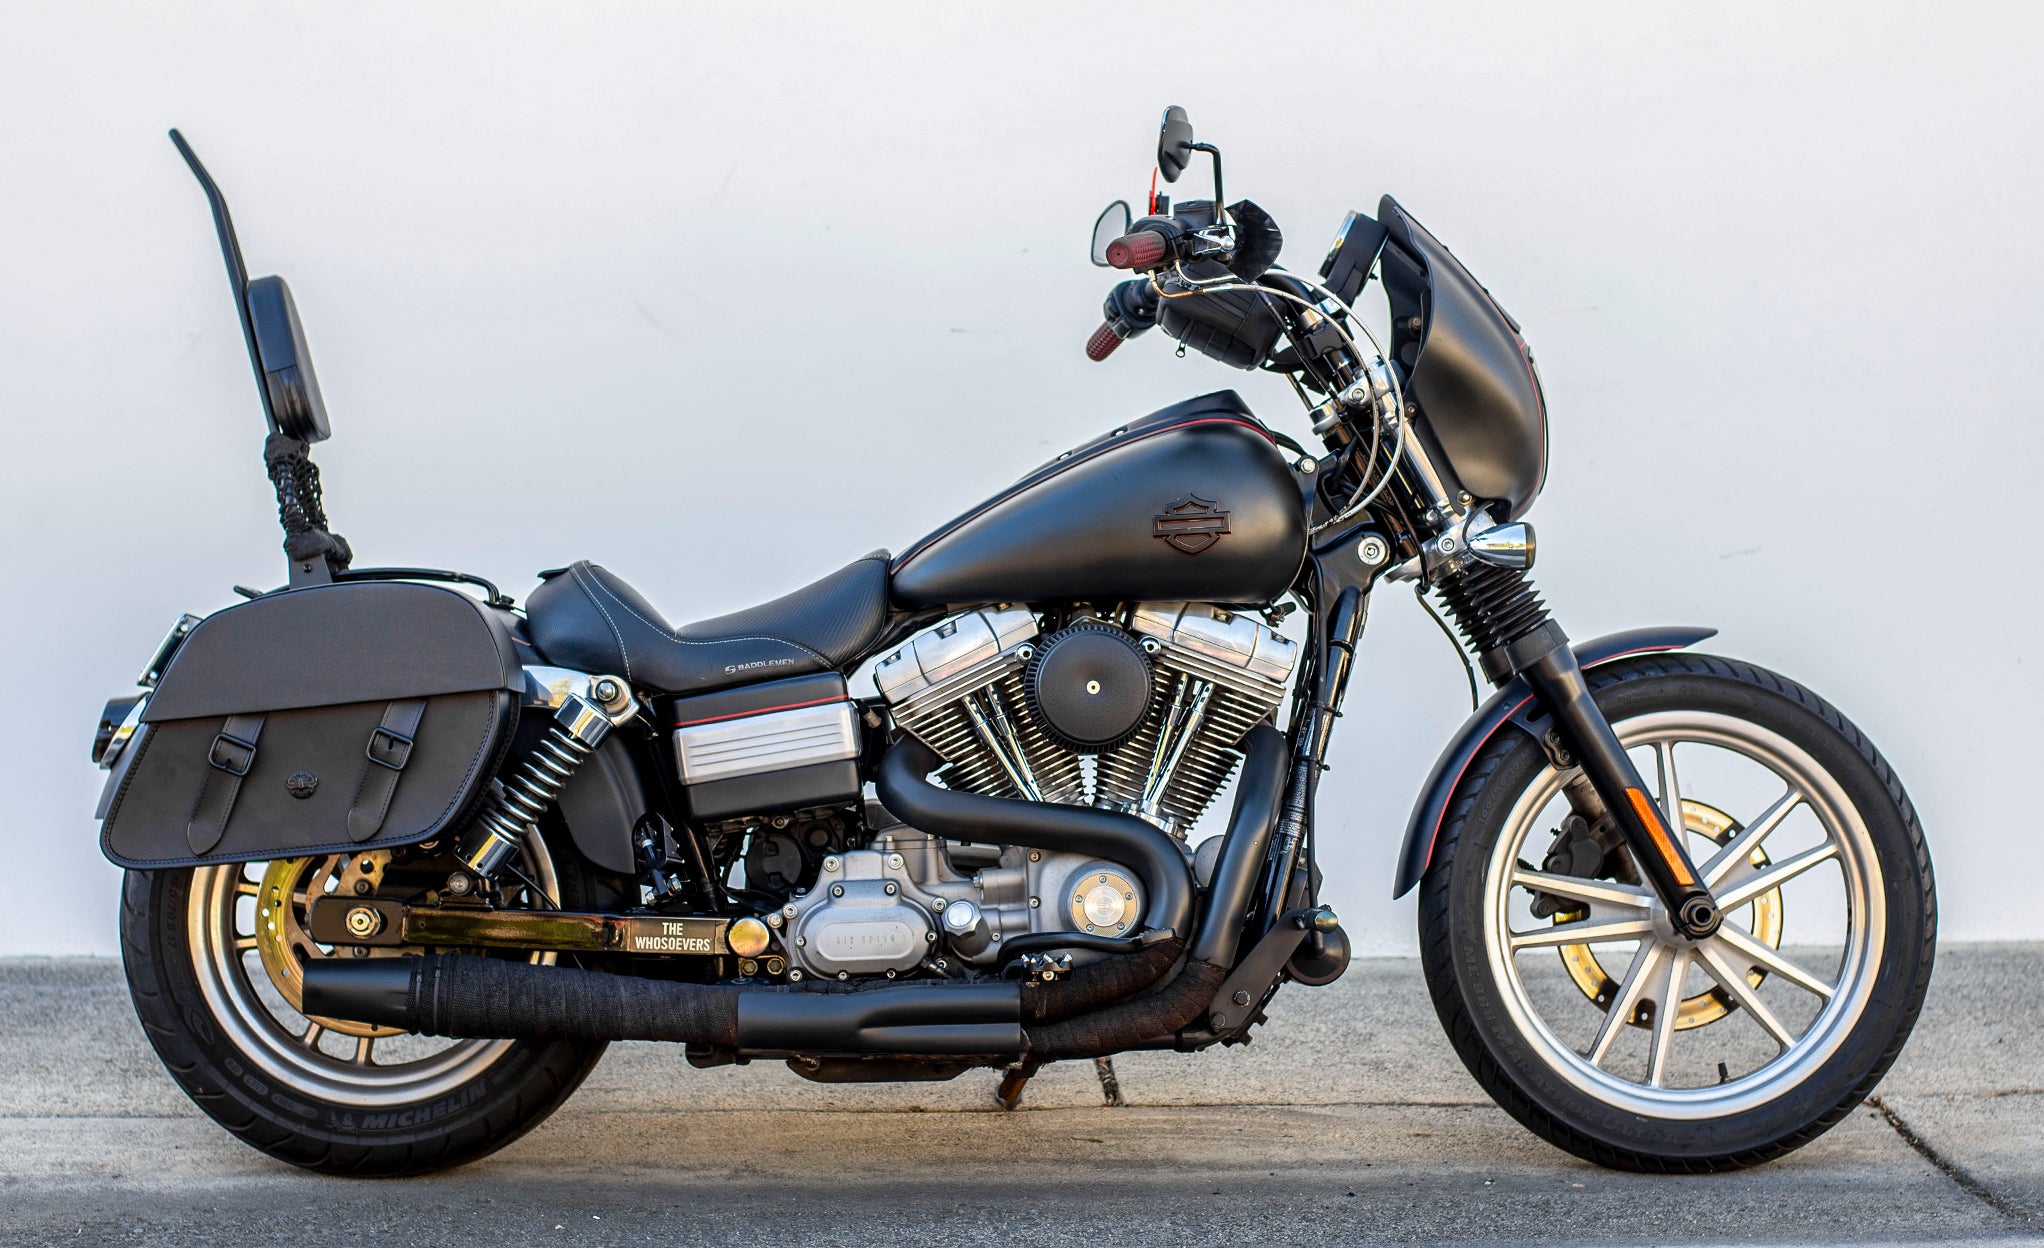 33L - Baelor Large Leather Motorcycle Saddlebags for Harley Dyna Super Glide FXD/I @expand